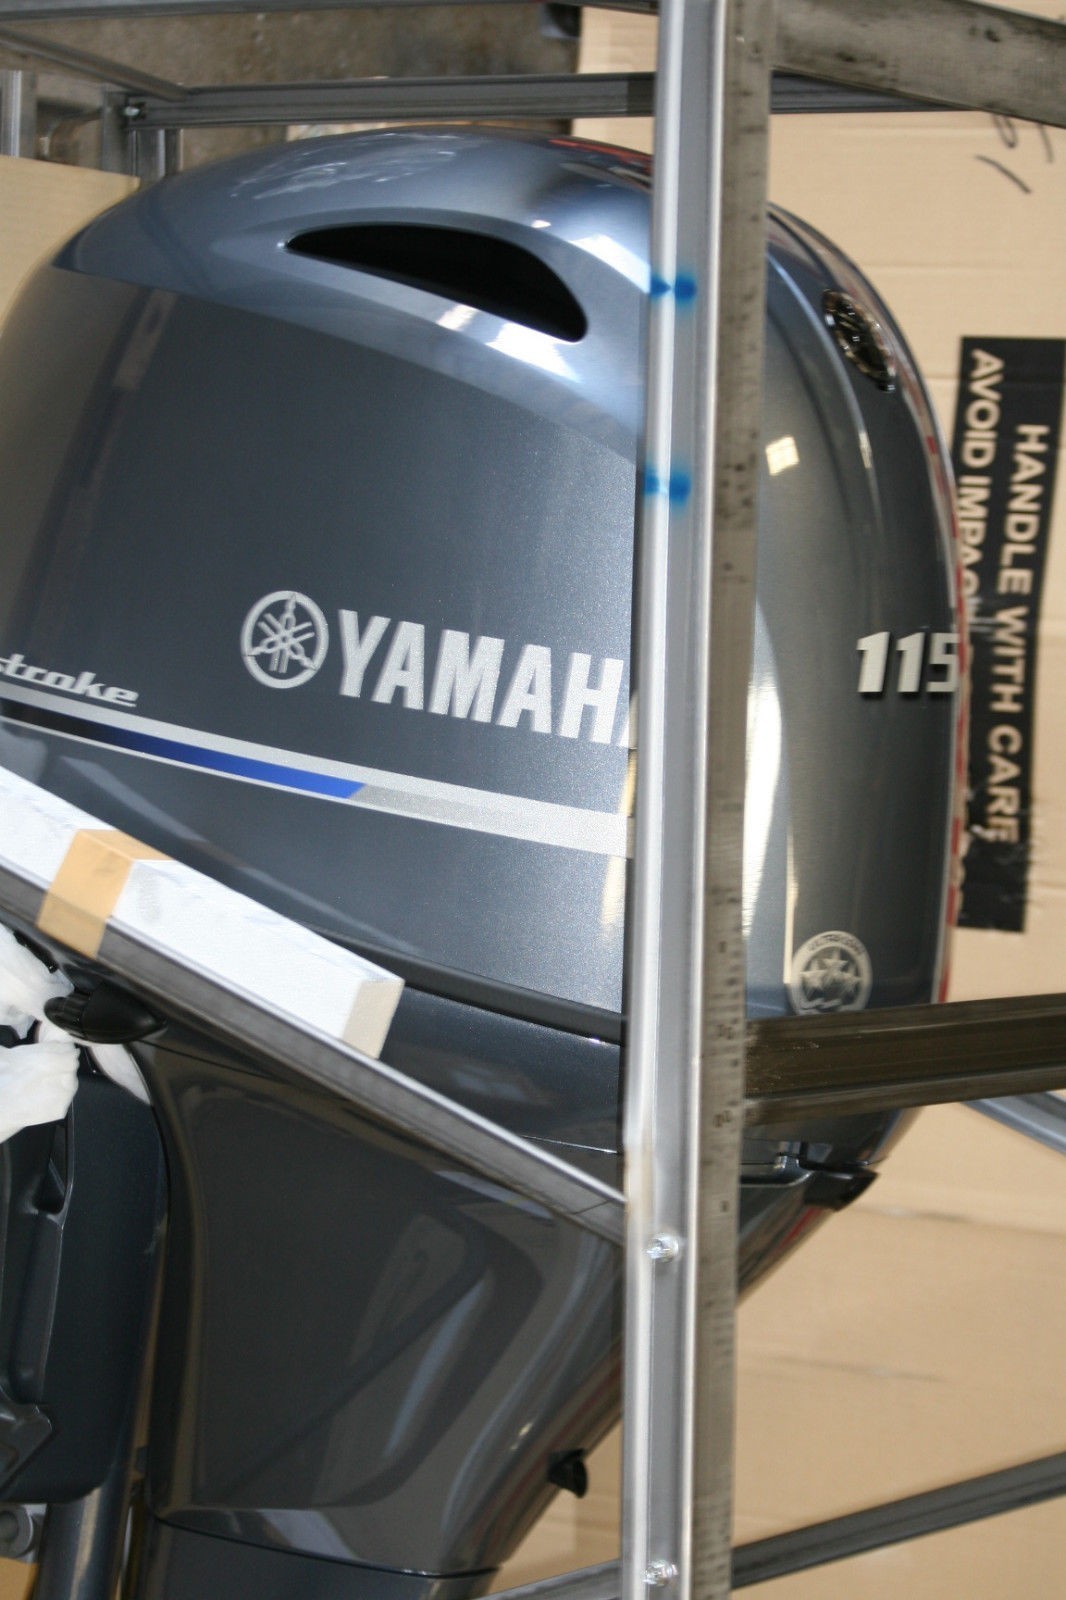 Yamaha 115 HP 4 Stroke Outboard Motor Engine3500 USD